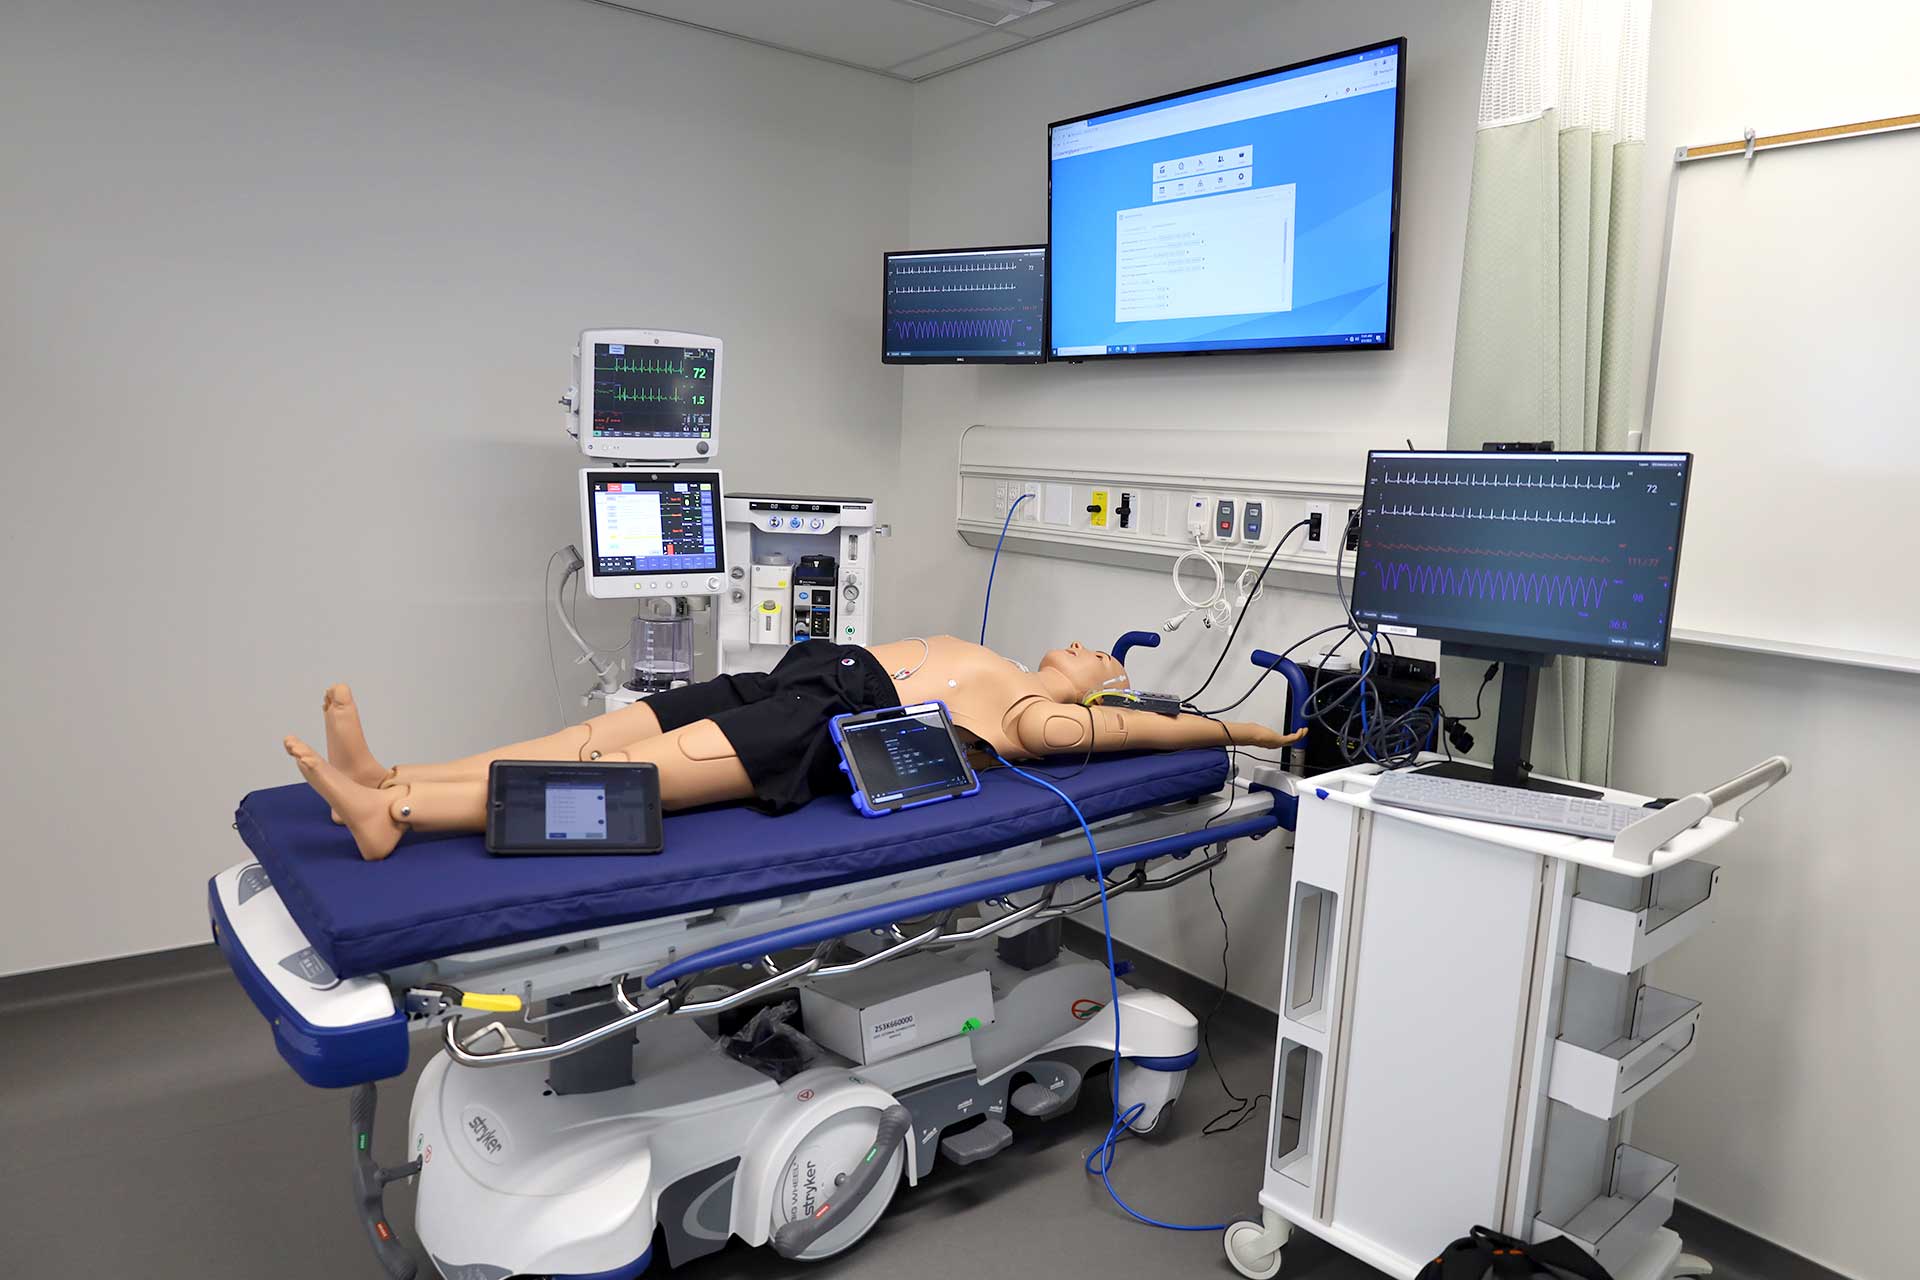 simulation manikin in hospital bed